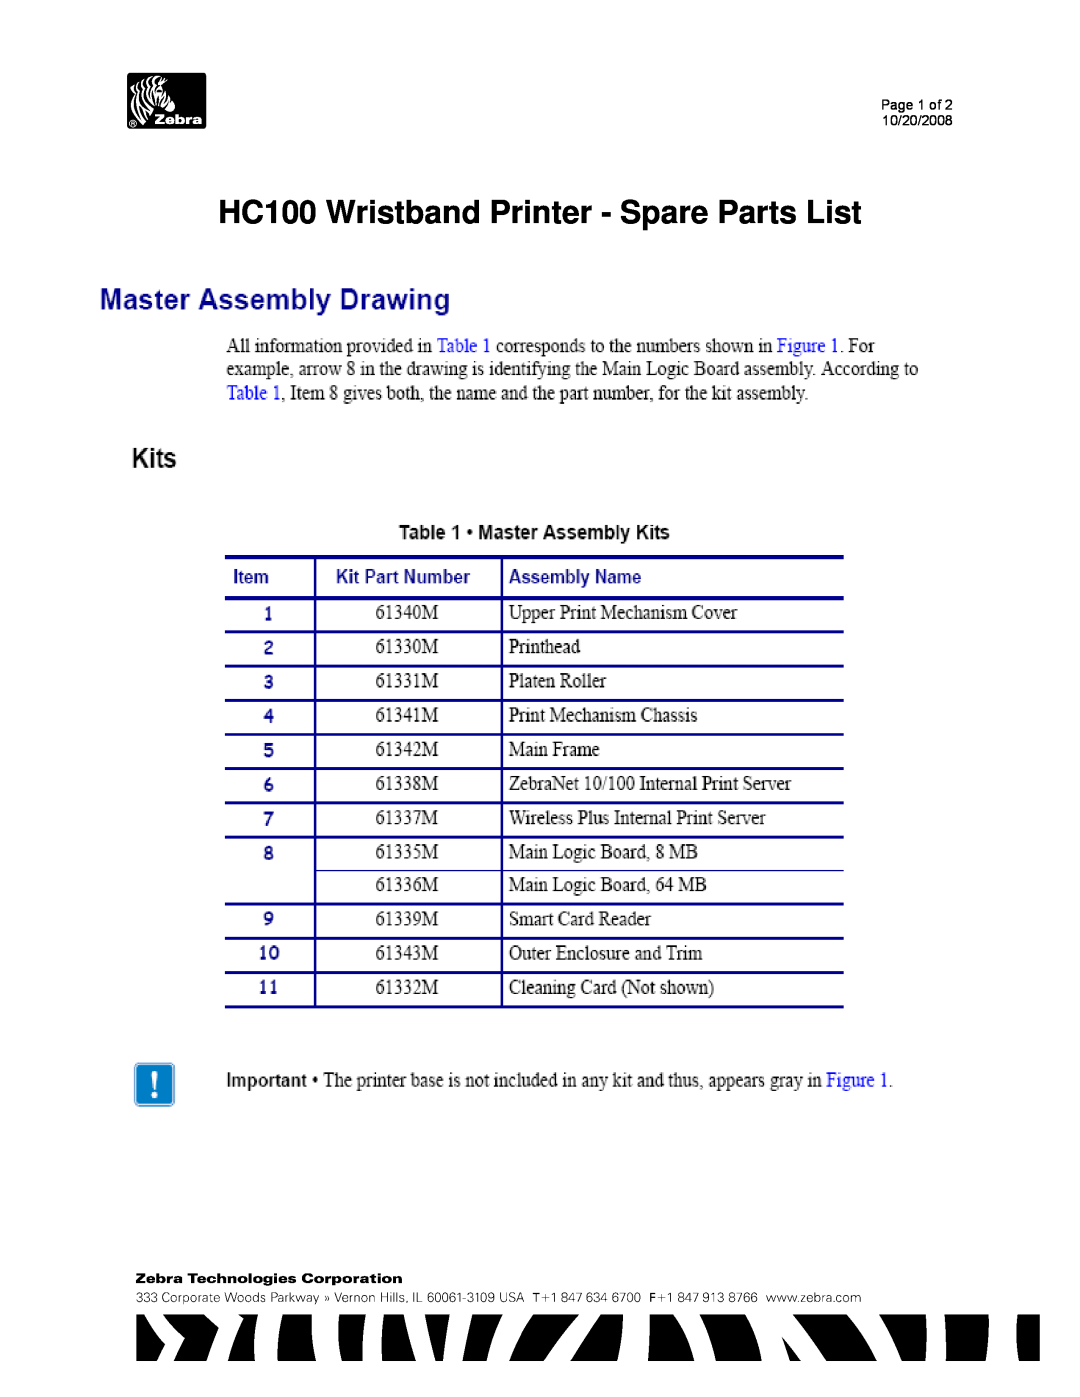 Zebra Technologies manual HC100 Wristband Printer - Spare Parts List, Page 1 of 2 10/20/2008 